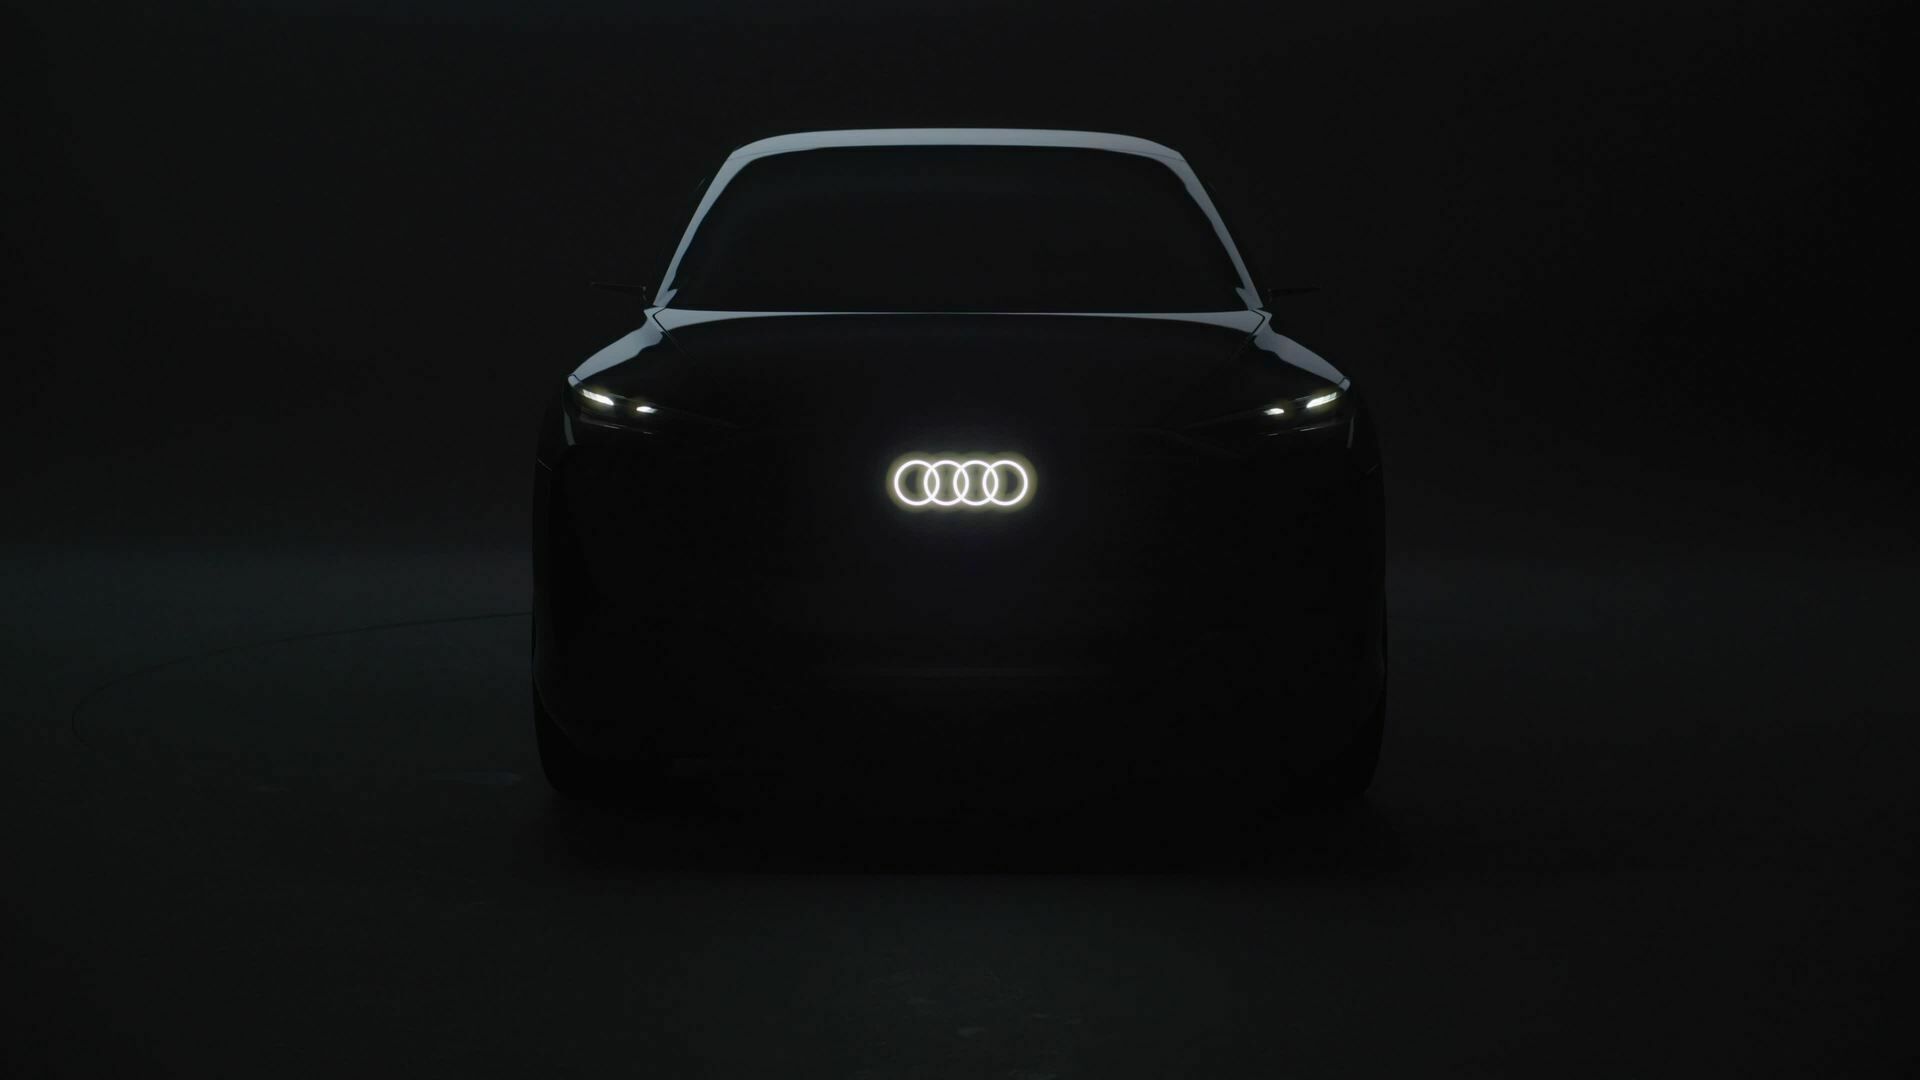 The design of the Audi urbansphere concept